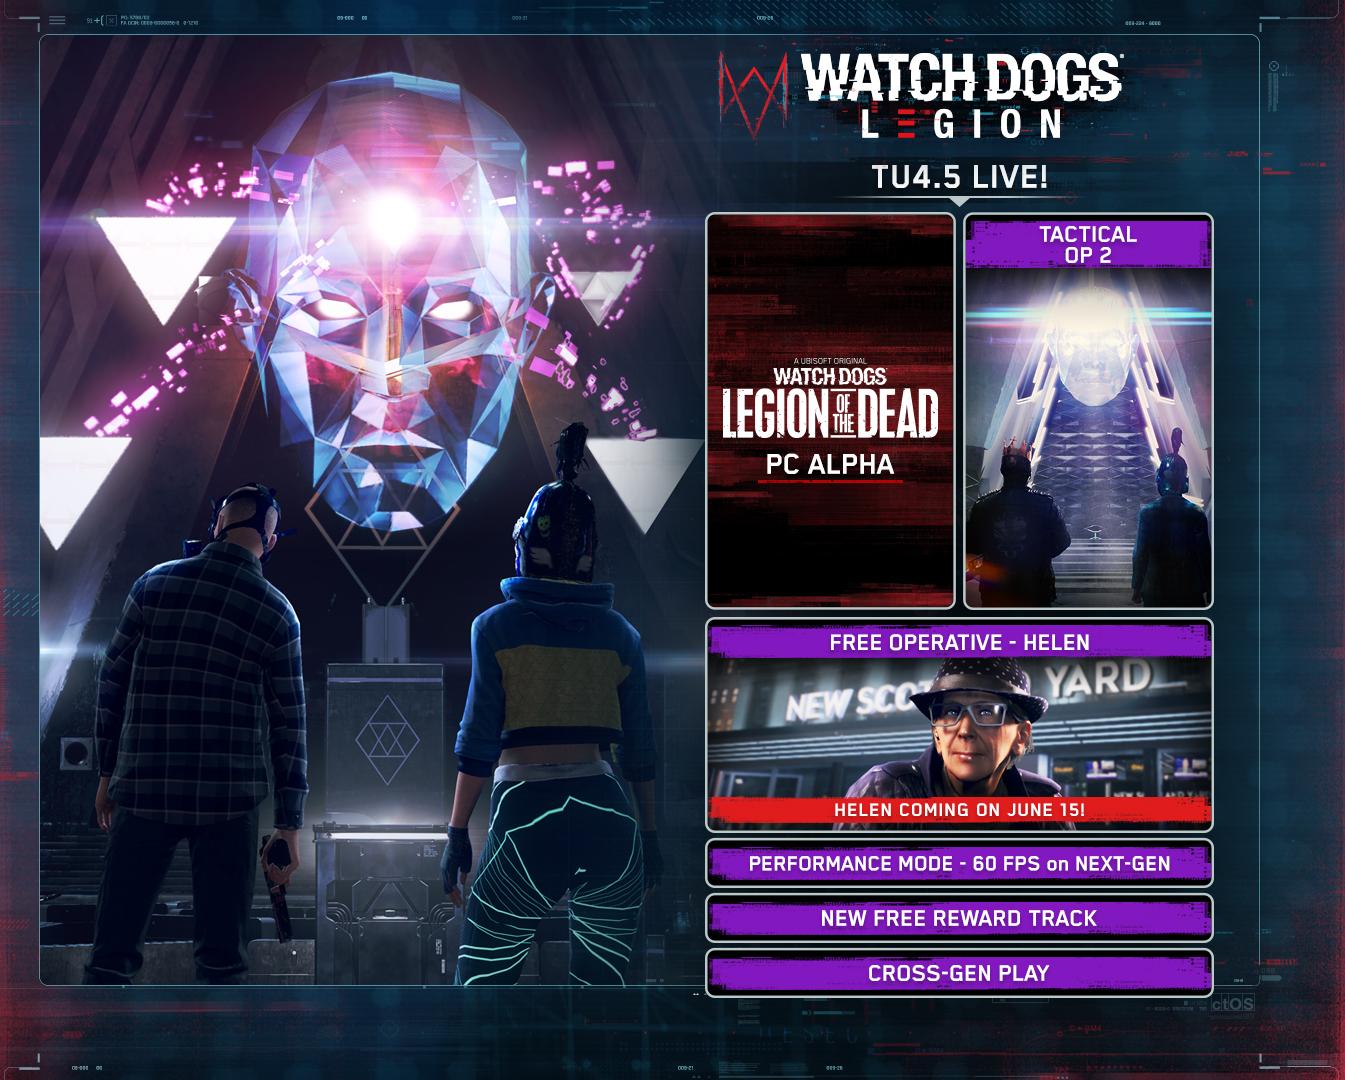 Watch Dogs®: Legion - Passe de Temporada - Epic Games Store